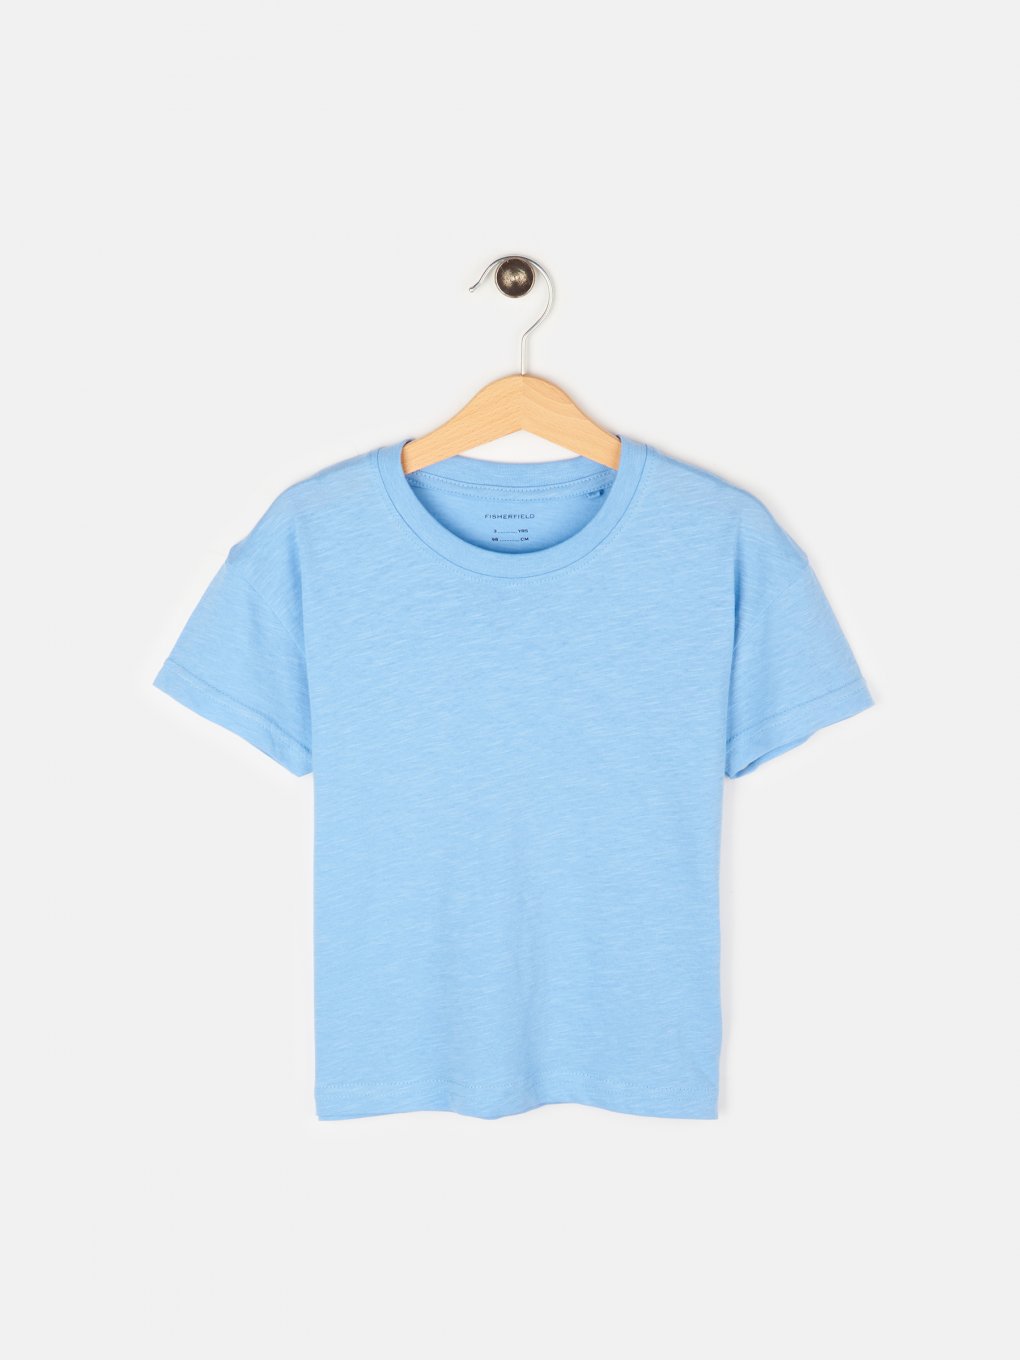 Oversize cotton slub jersey short sleeve t-shirt